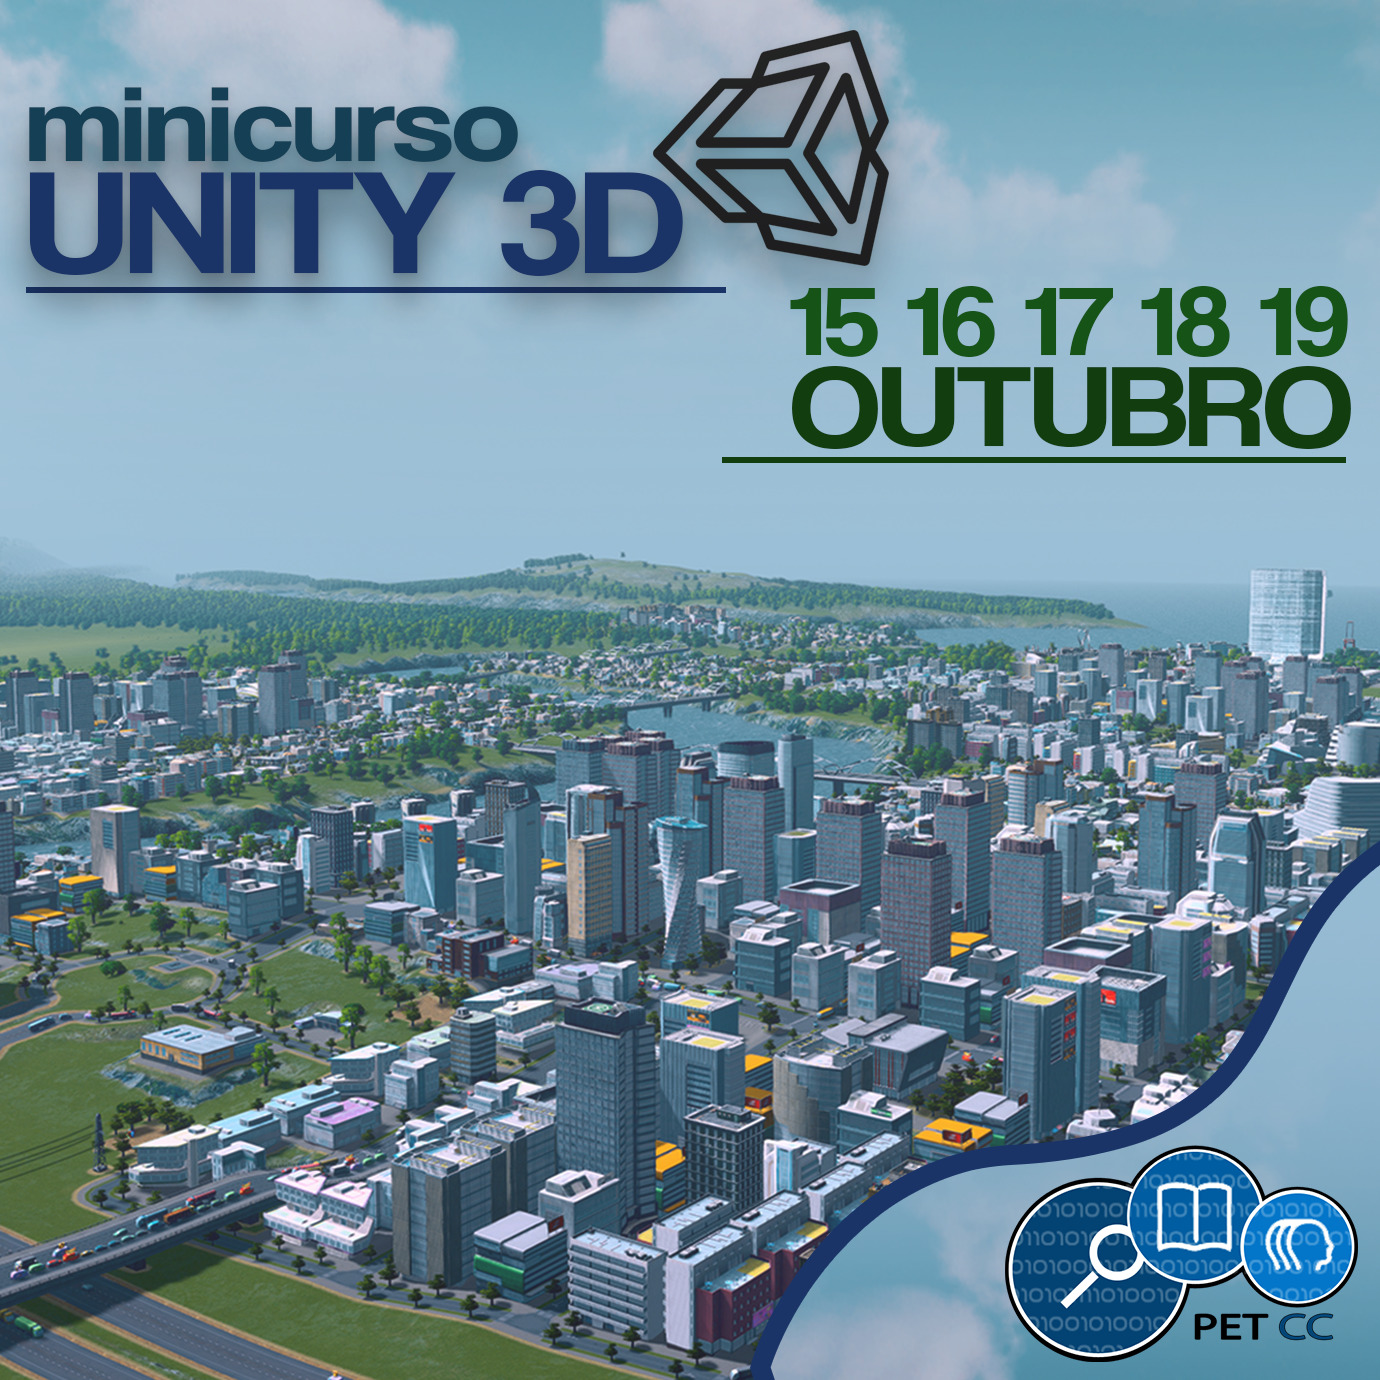 minicurso unity 3d